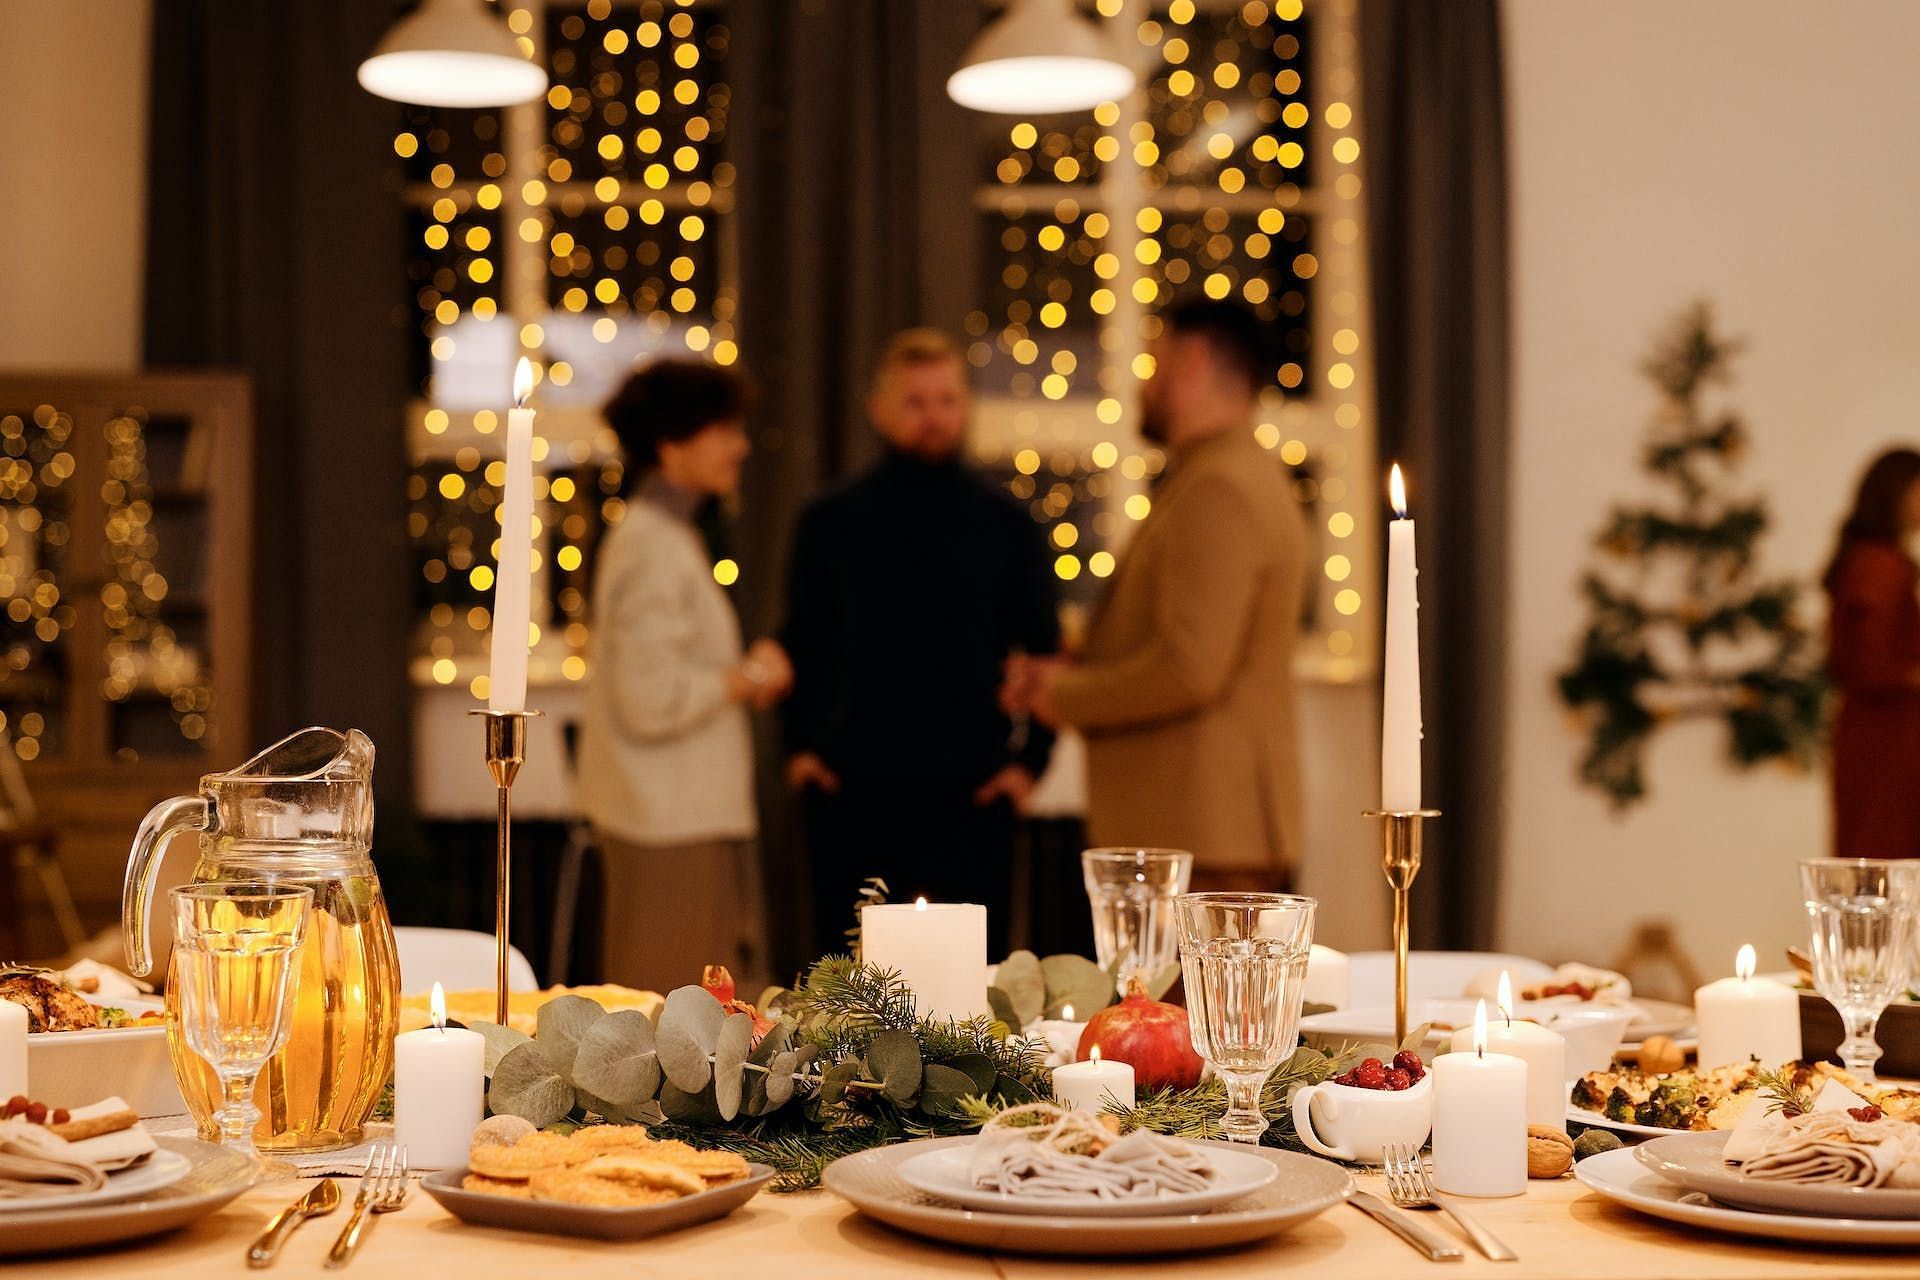 A good Christmas dinner makes the festival merrier (Image via Pexels/Nicole Michalou)